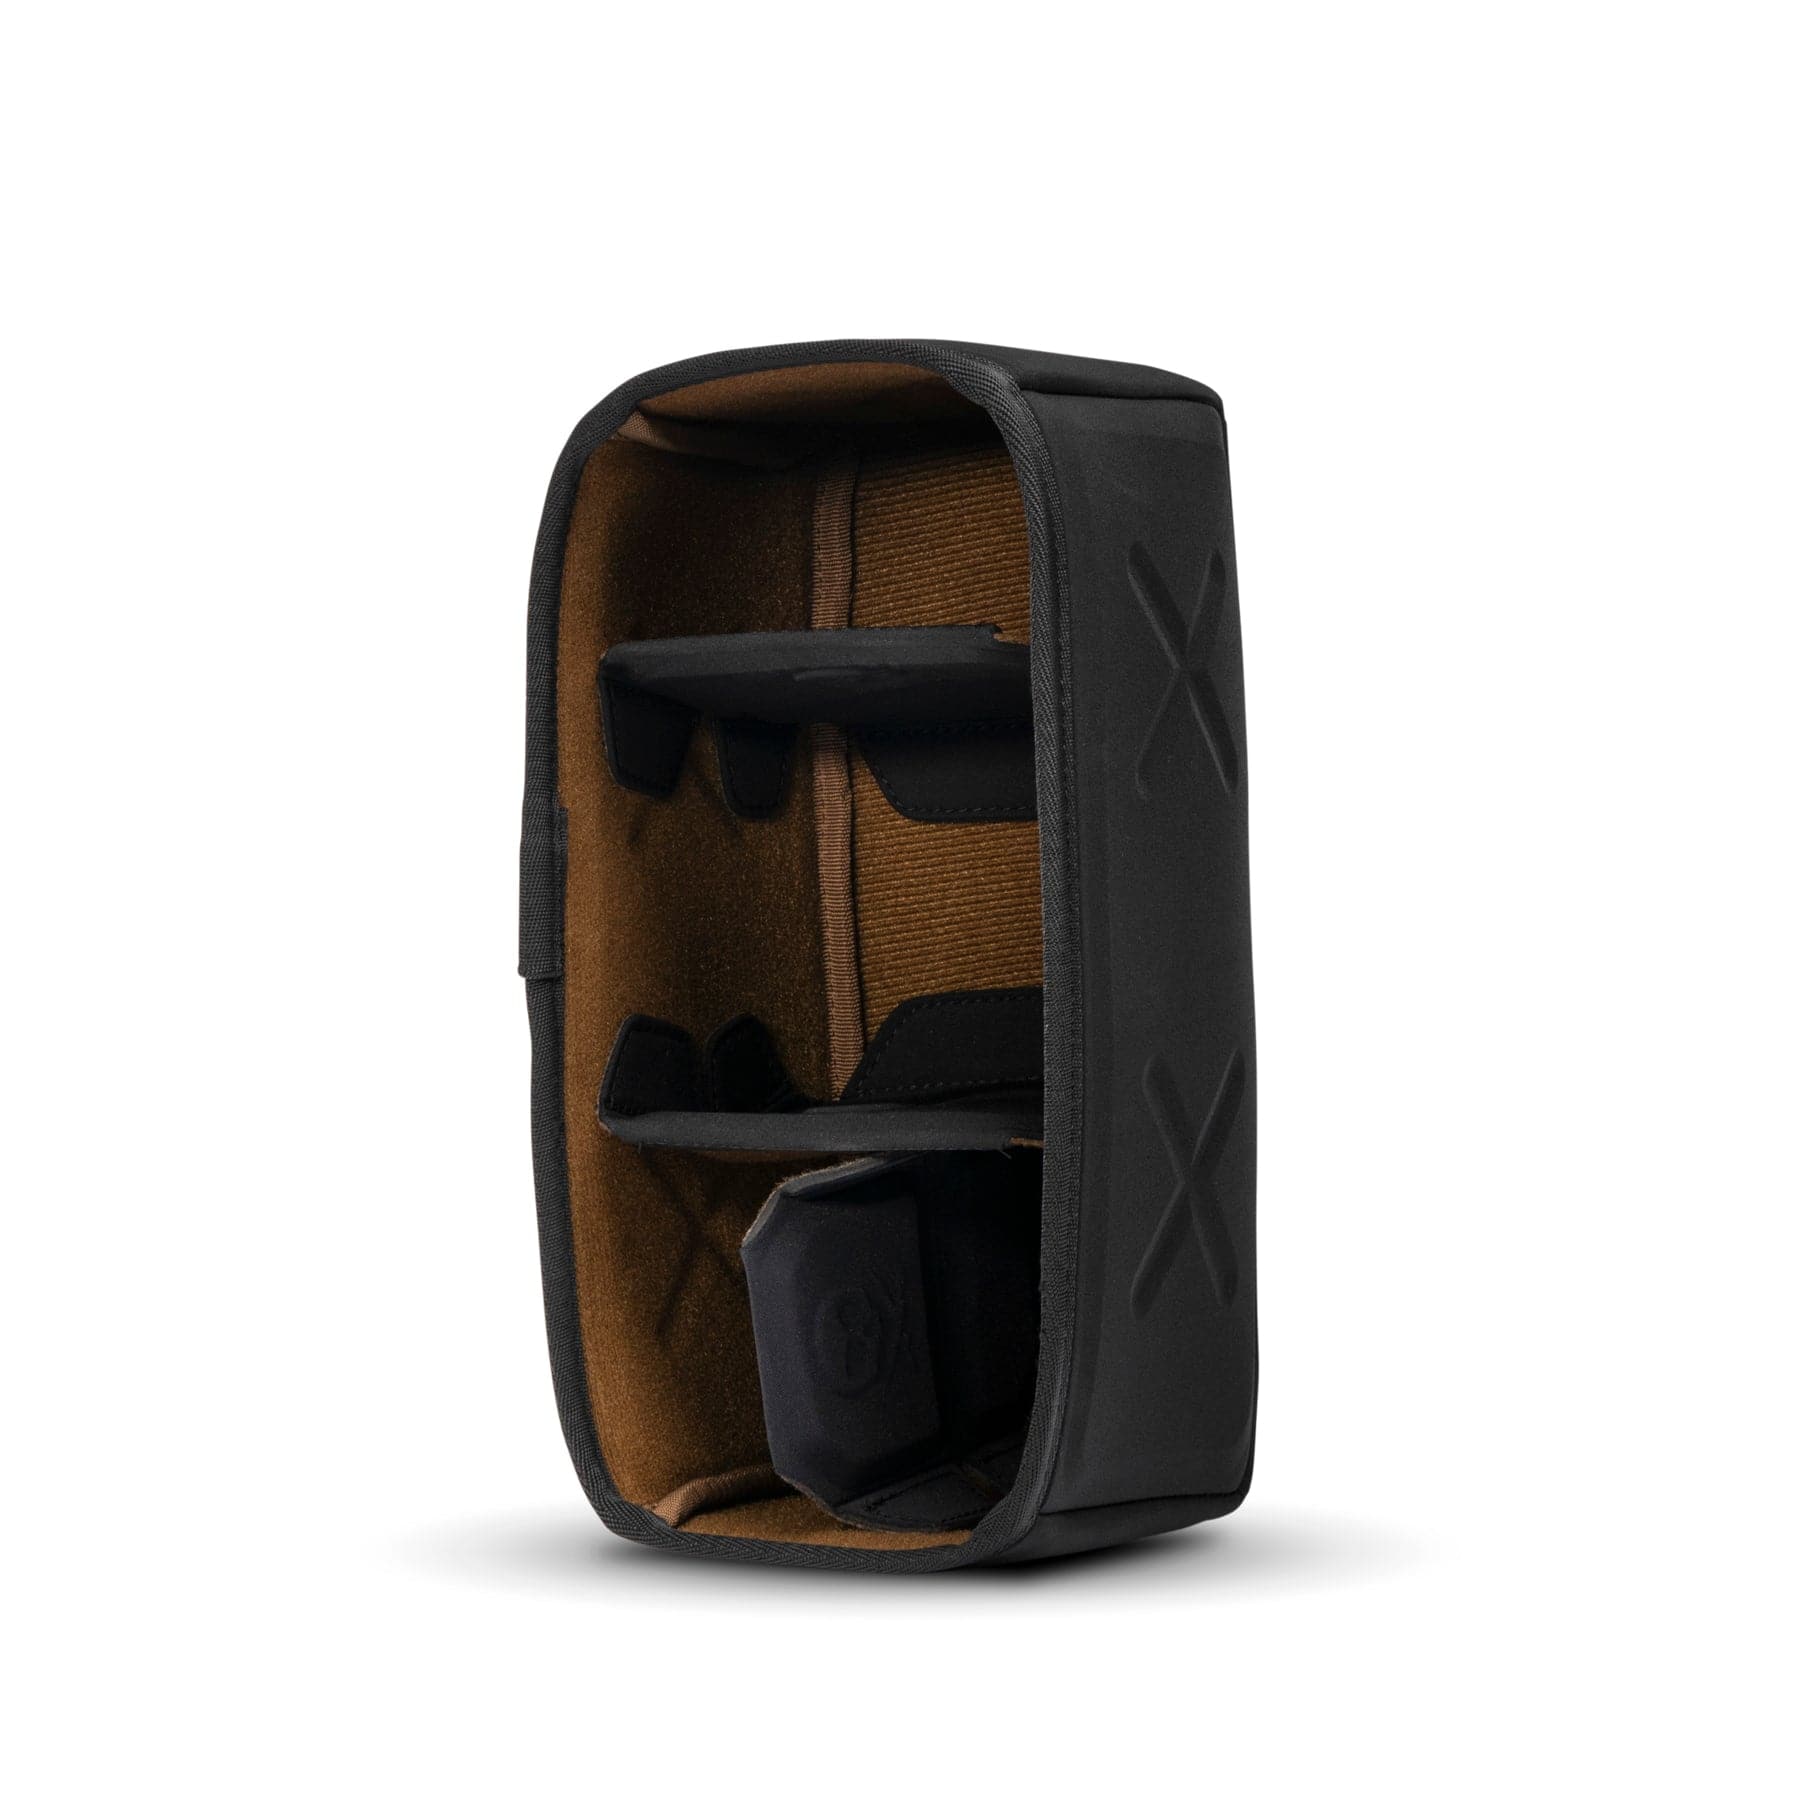 Nomatic McKinnon 21L Cube Pack Backpack | Black